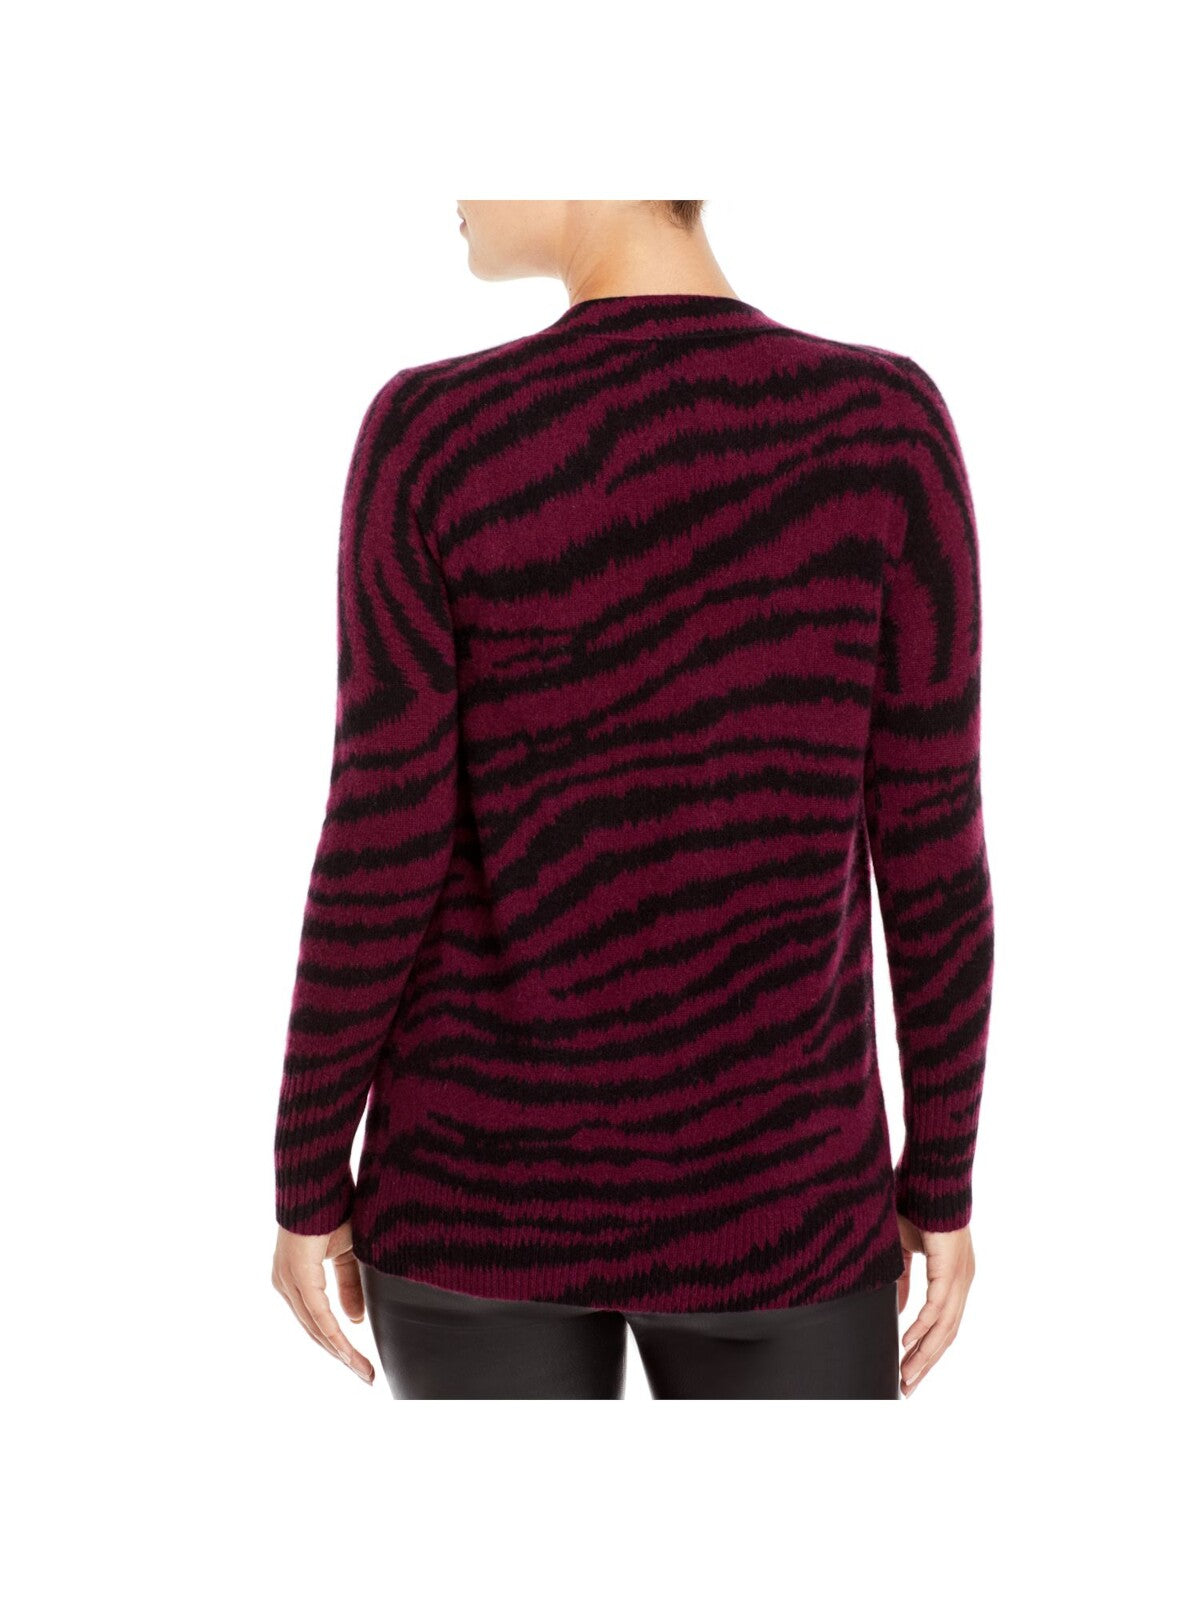 Designer Brand Womens Burgundy Long Sleeve V Neck Button Up Sweater XS